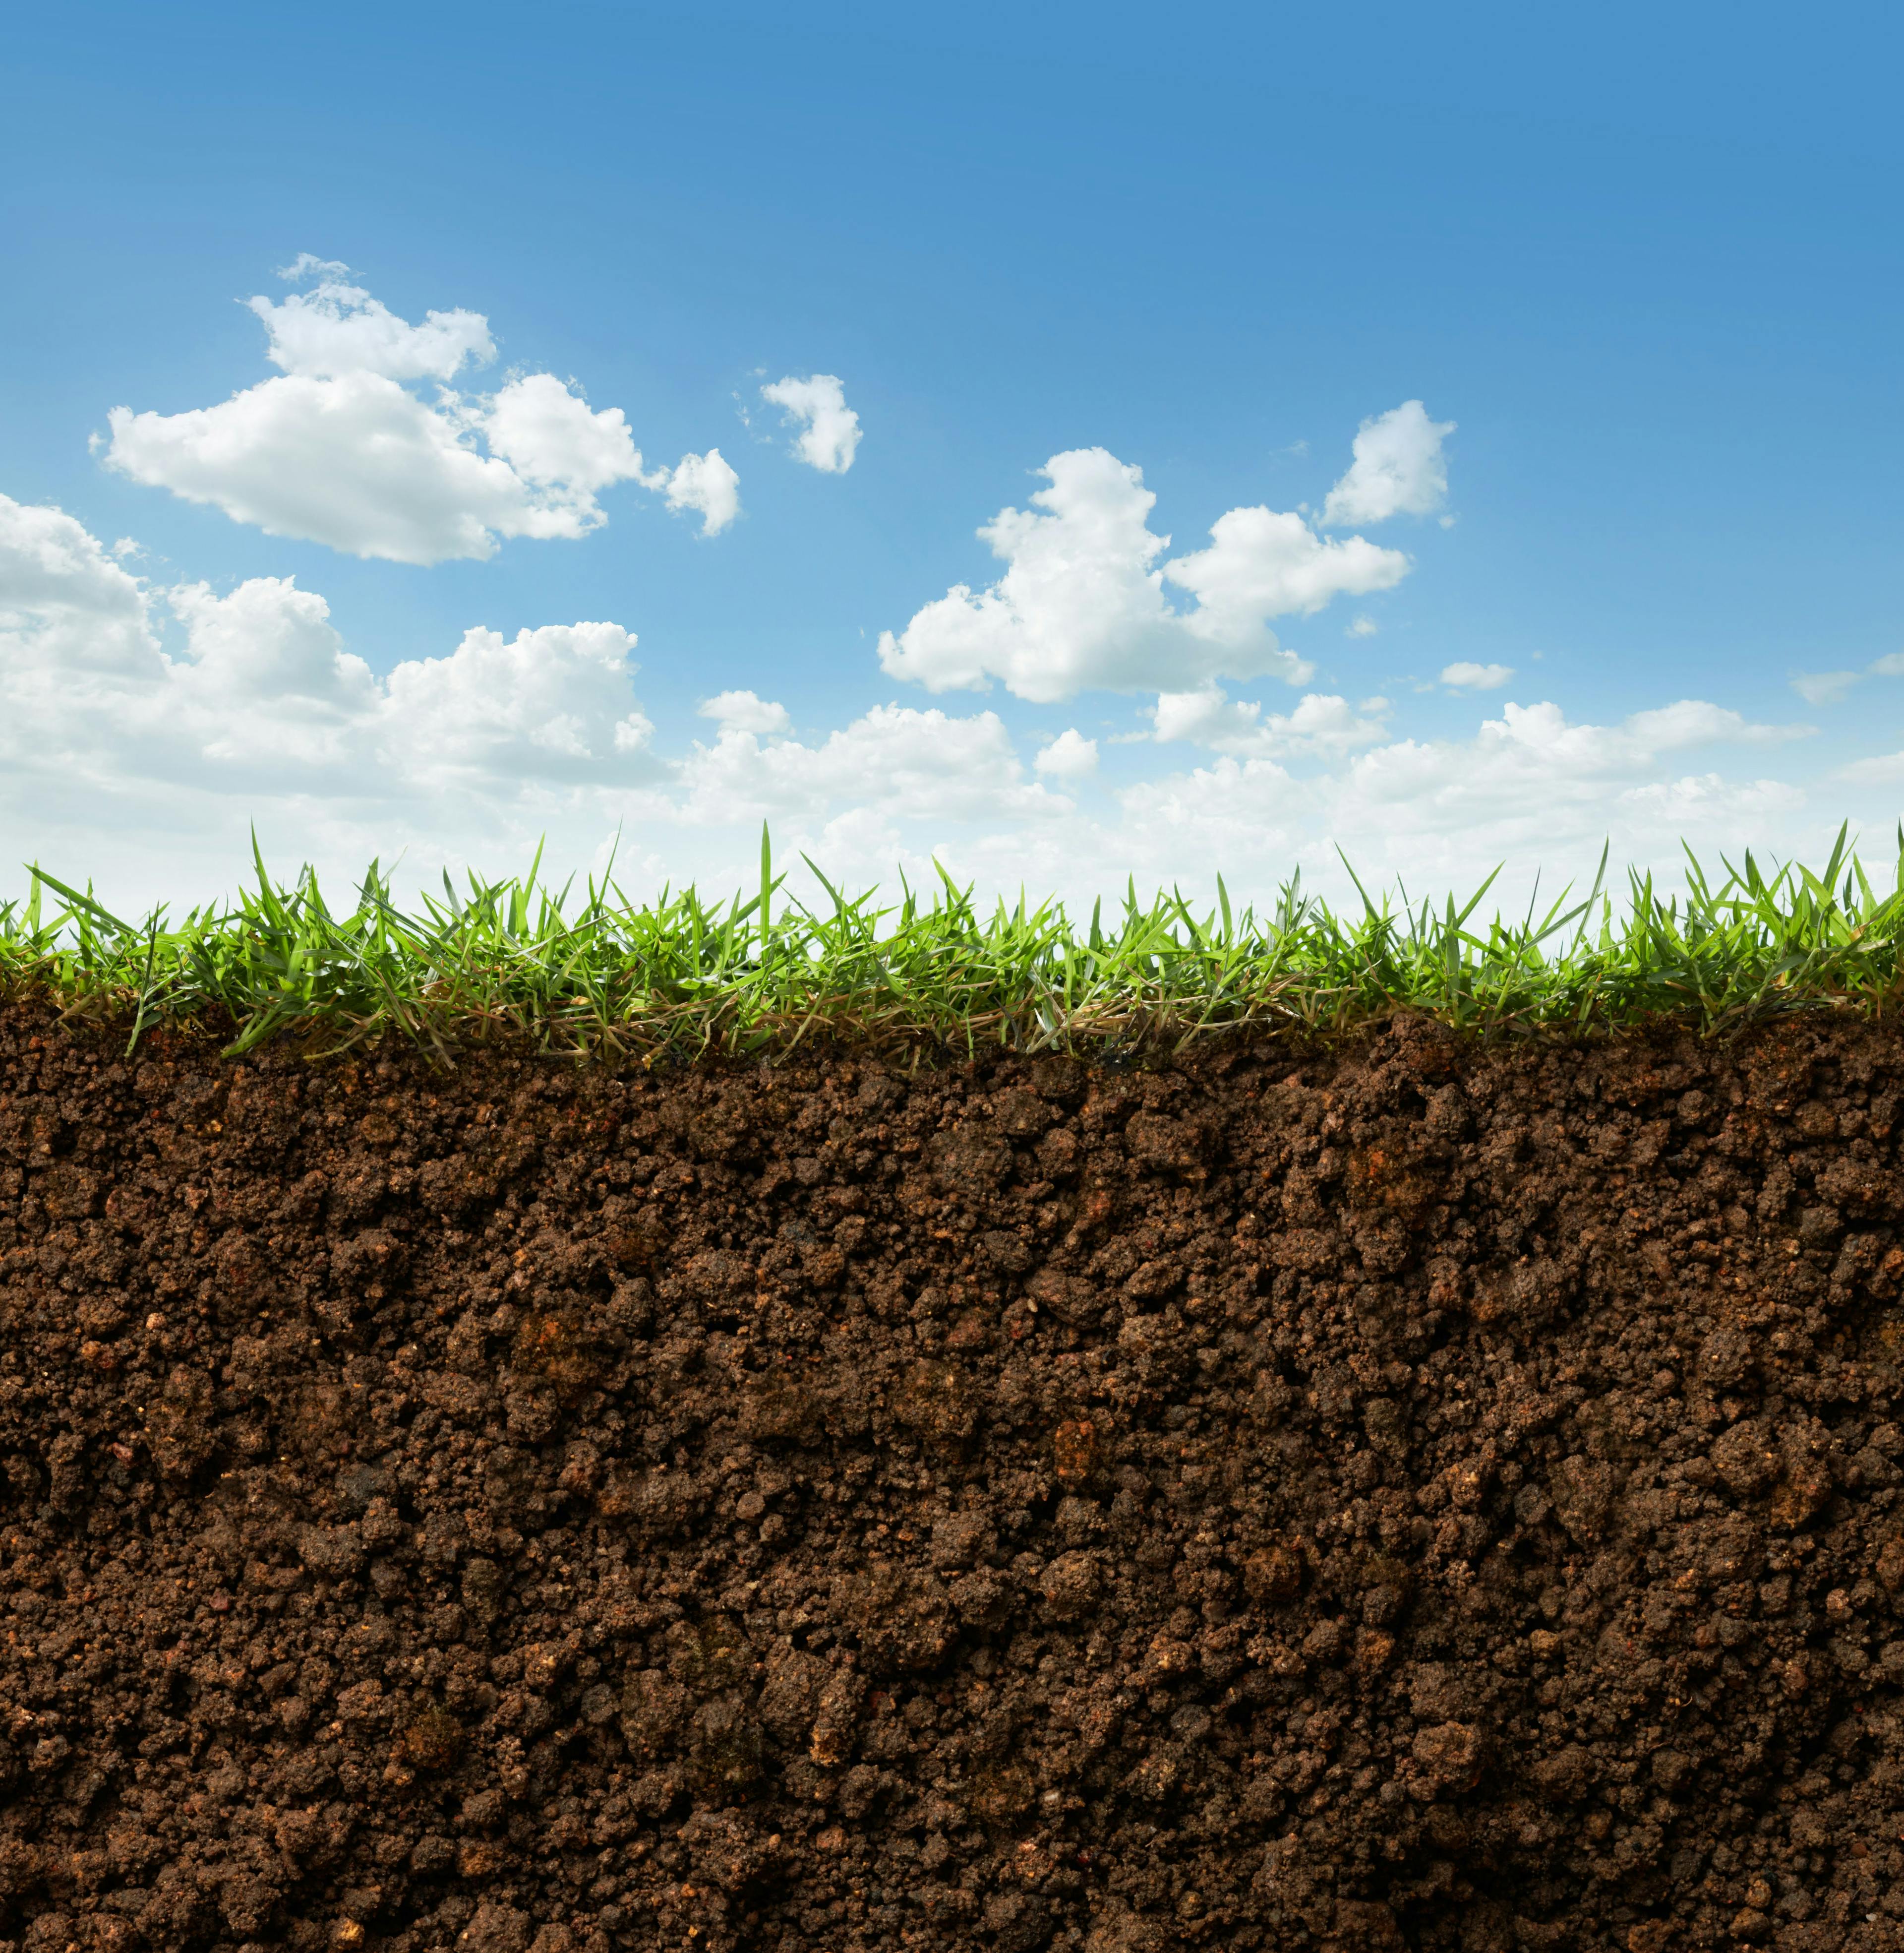 Grass and soil | Image Credit: © Okea - stock.adobe.com